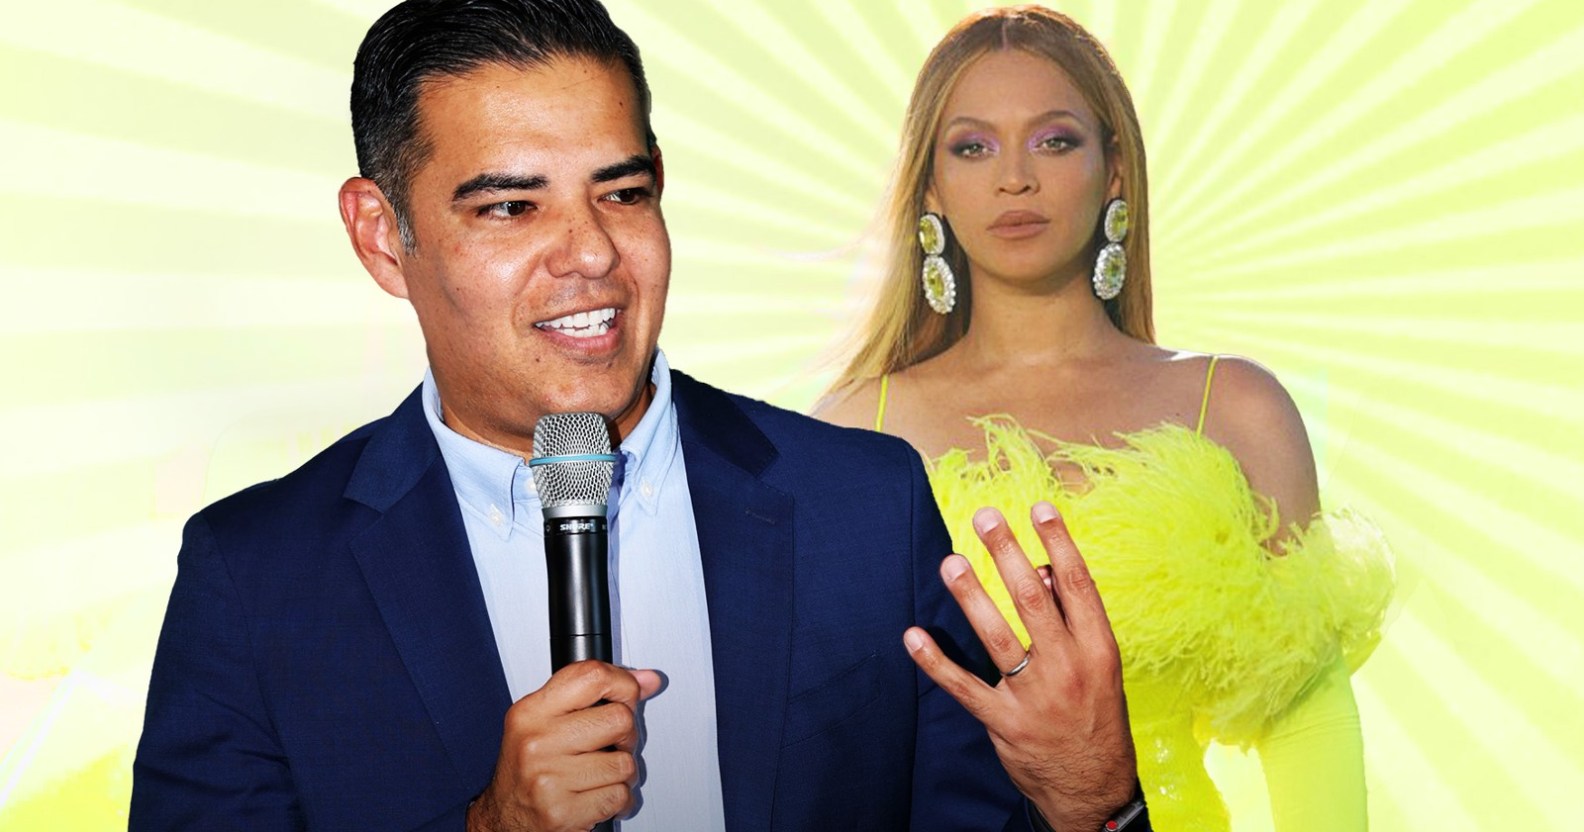 Robert Garcia in a mock-up image with Beyoncé